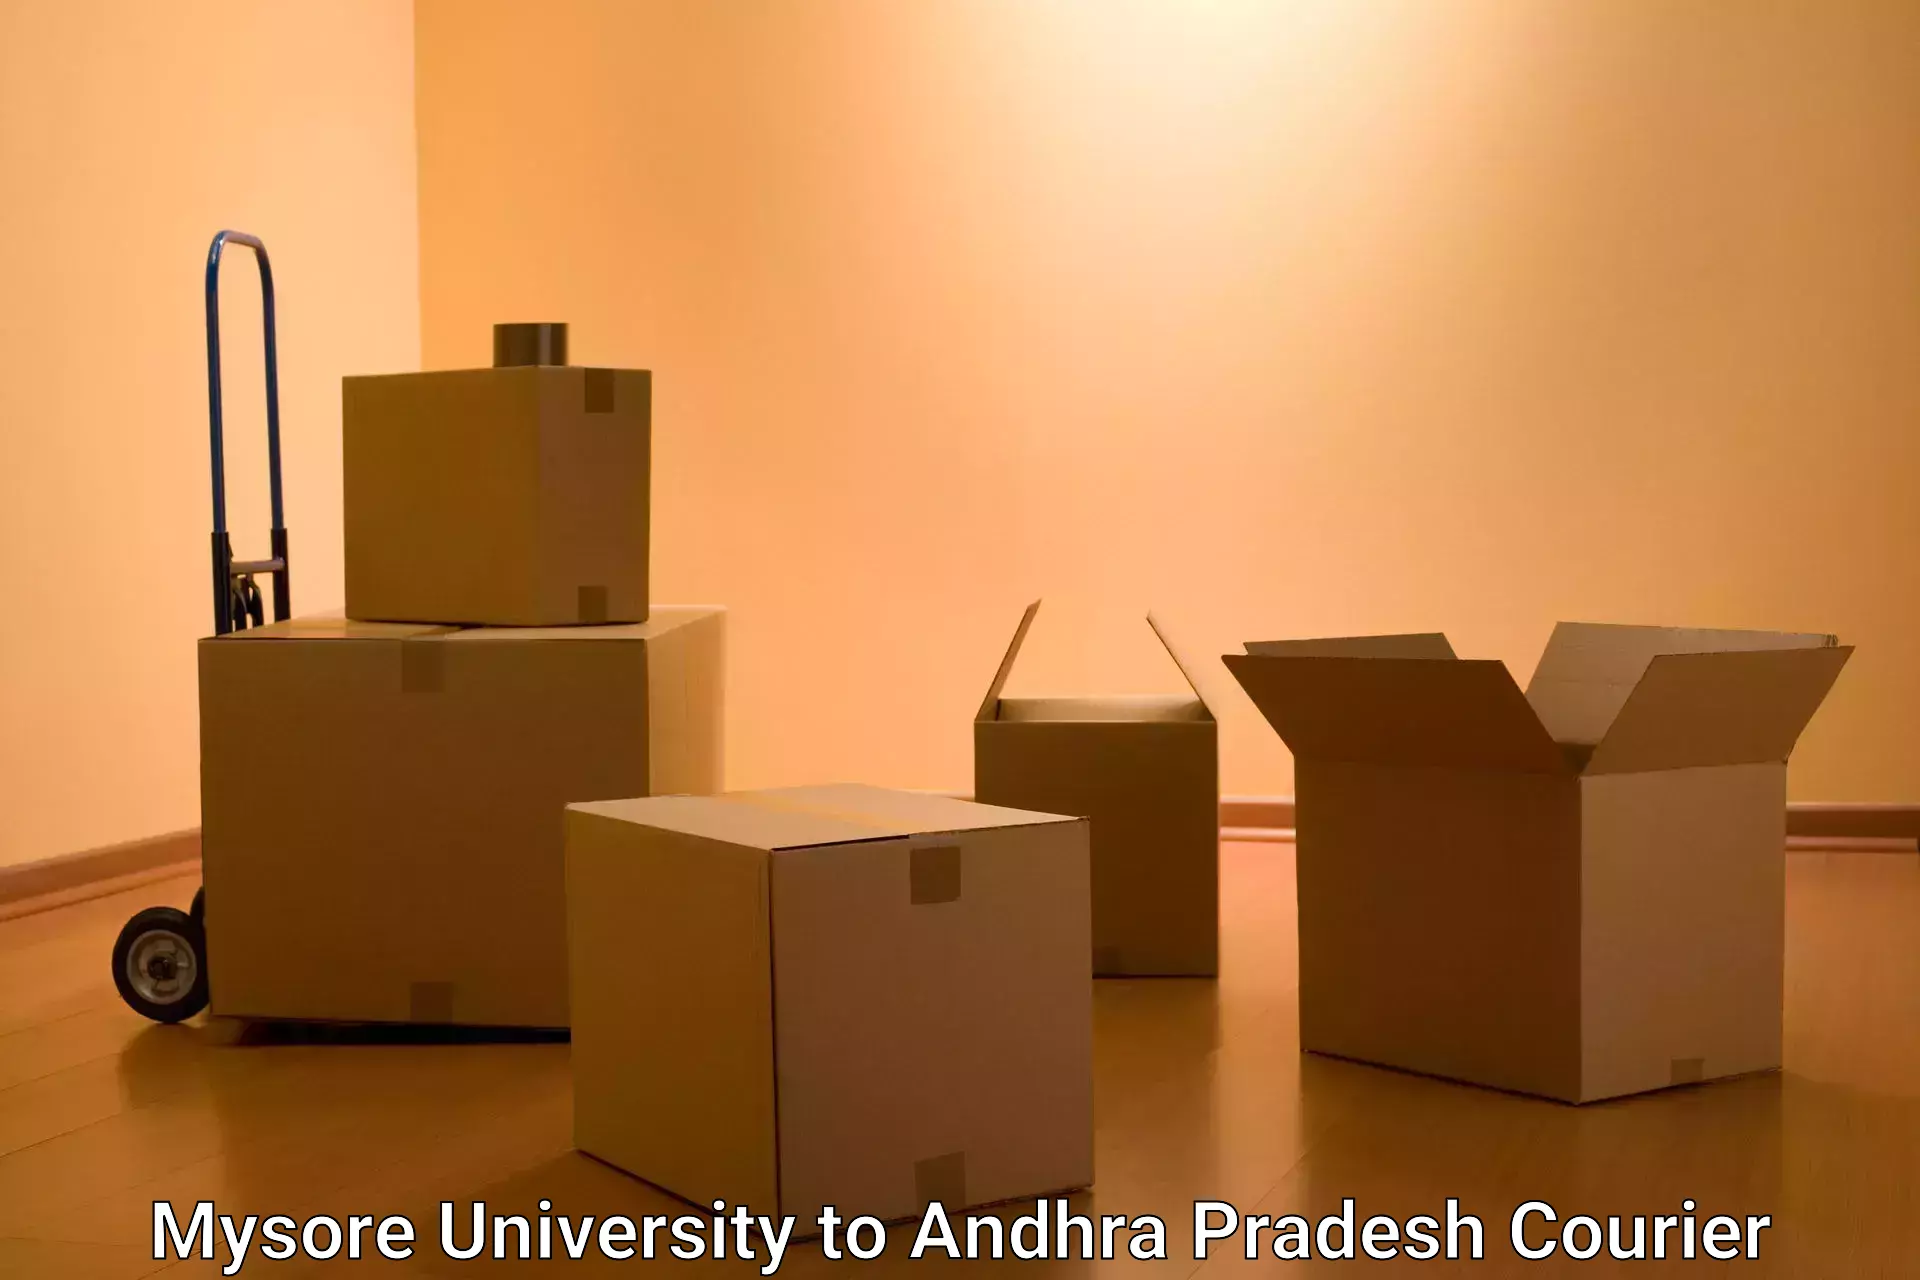 Large package courier Mysore University to Garividi